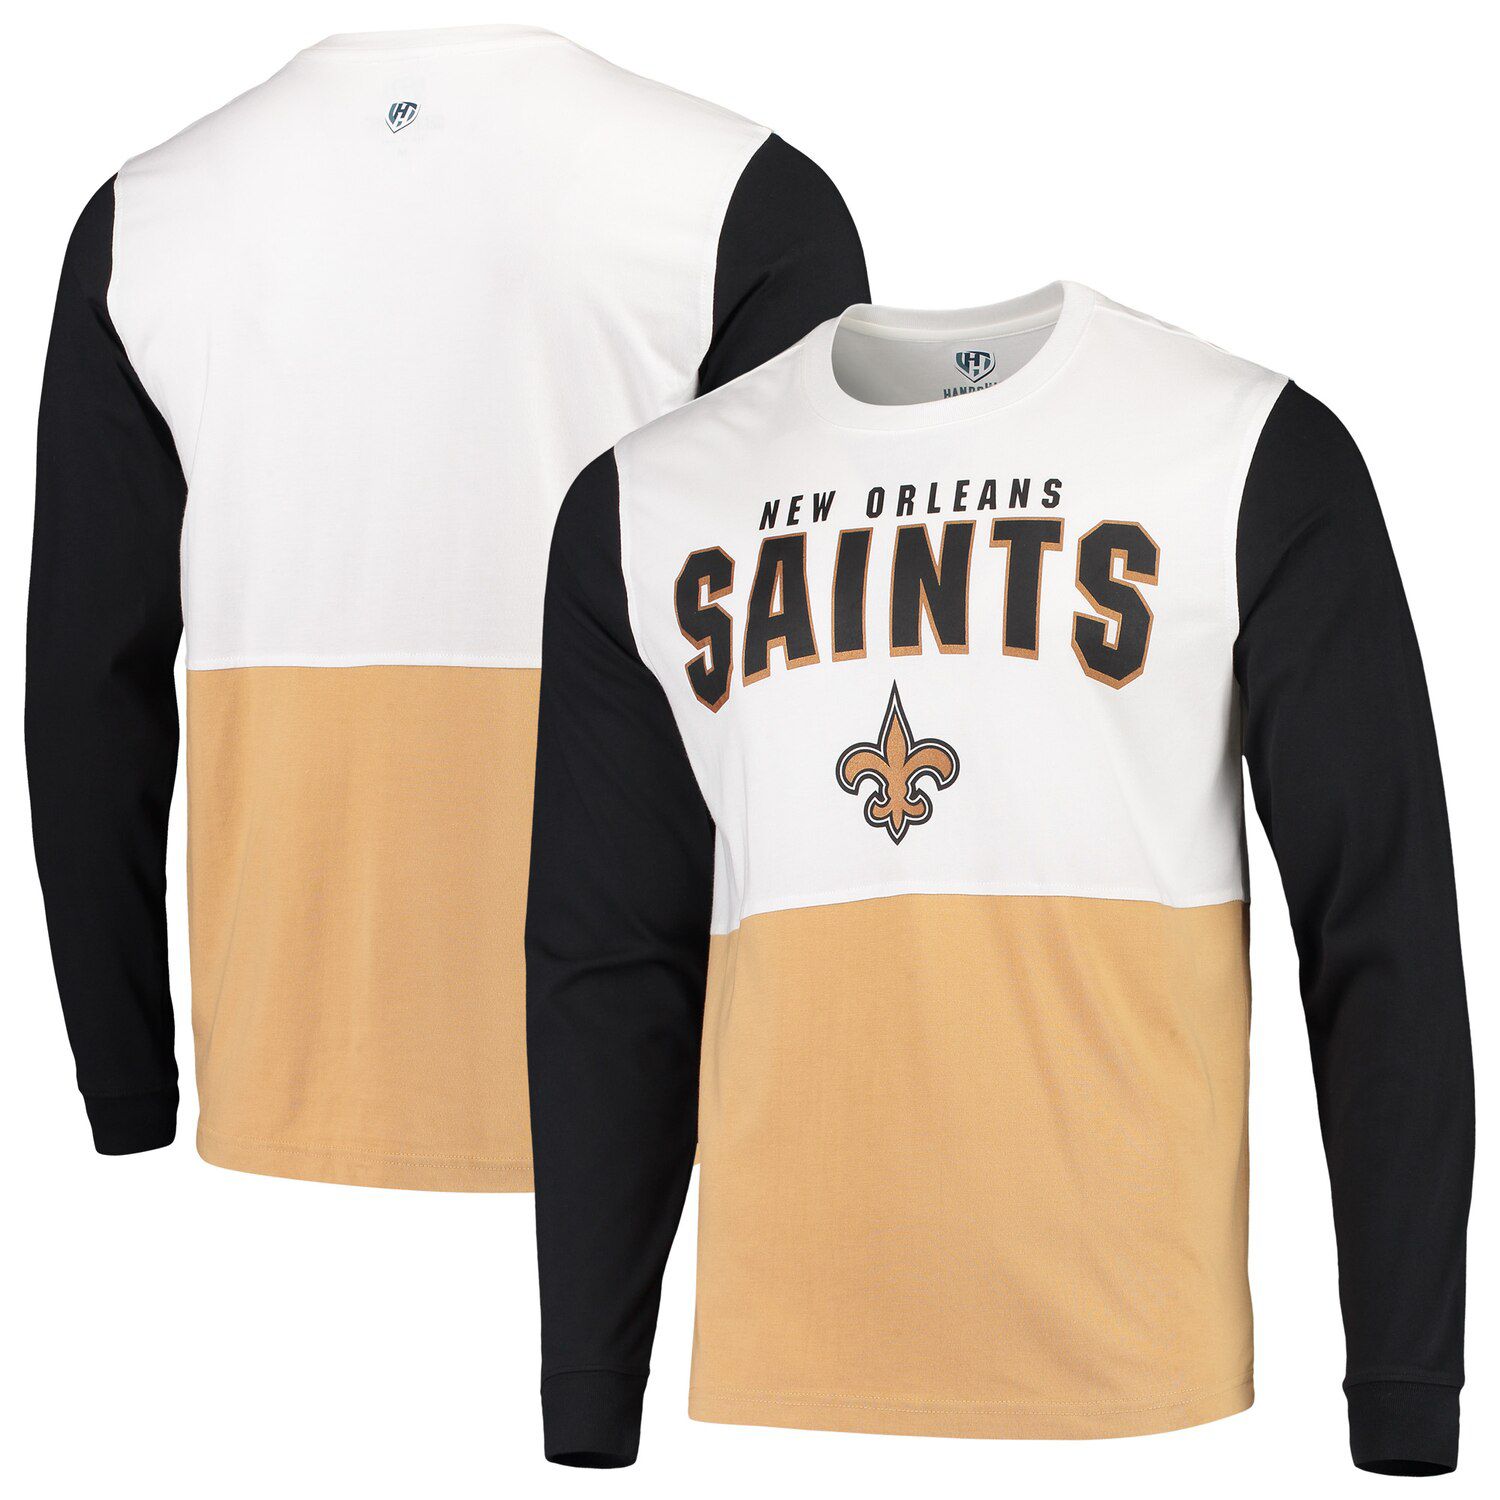 saints long sleeve jersey